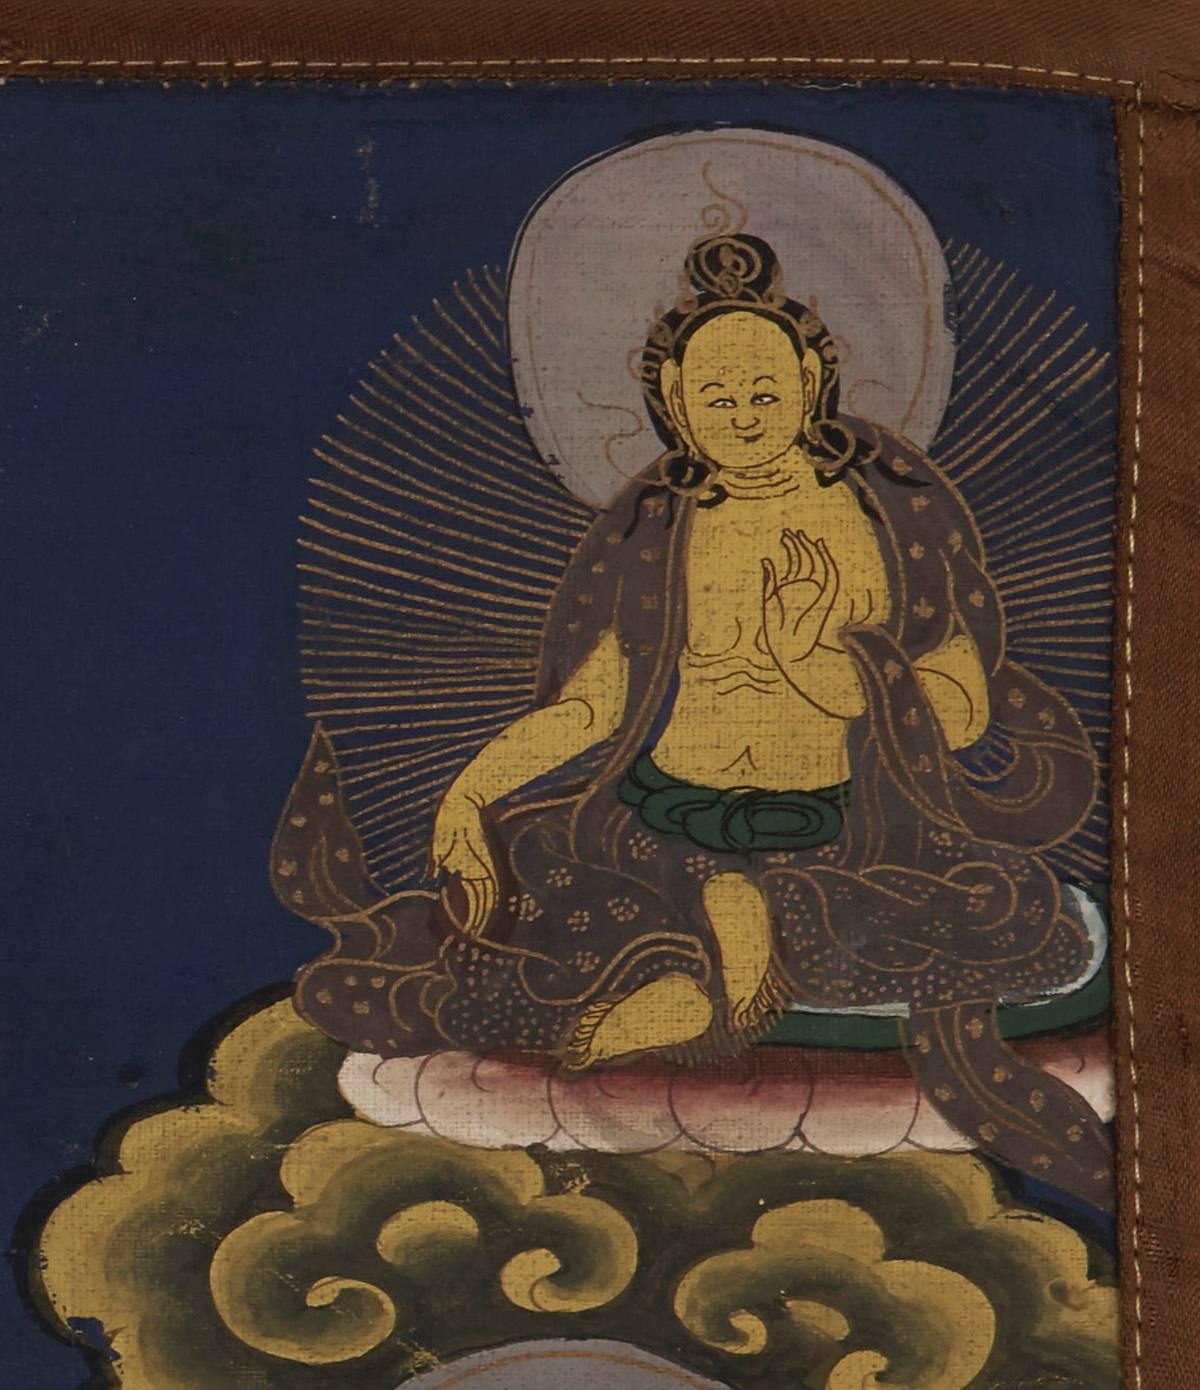 Painted Antique Chinese/Tibetan Thanka with Buddha & Gods, 19th Century